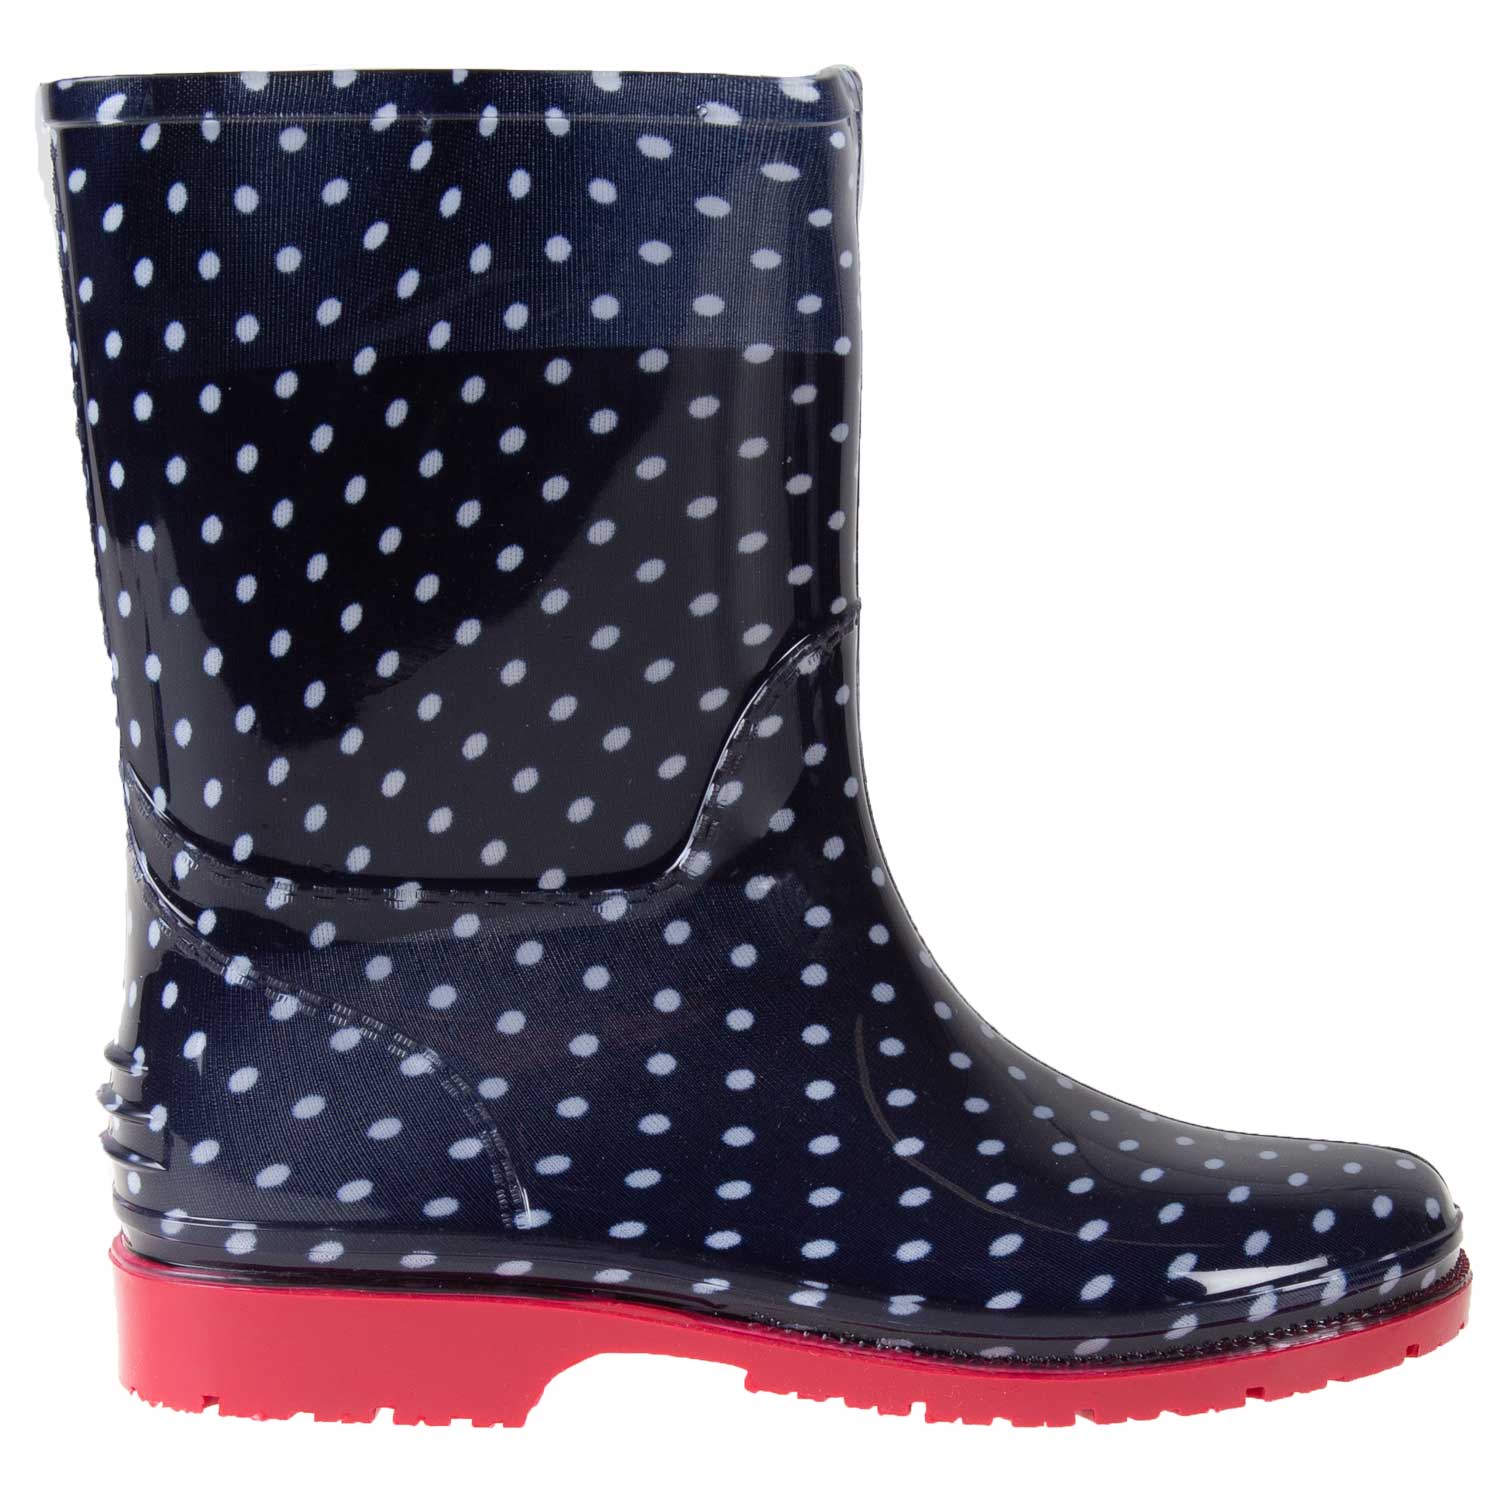 Rubber rain boots - Navy polka dots, size 2